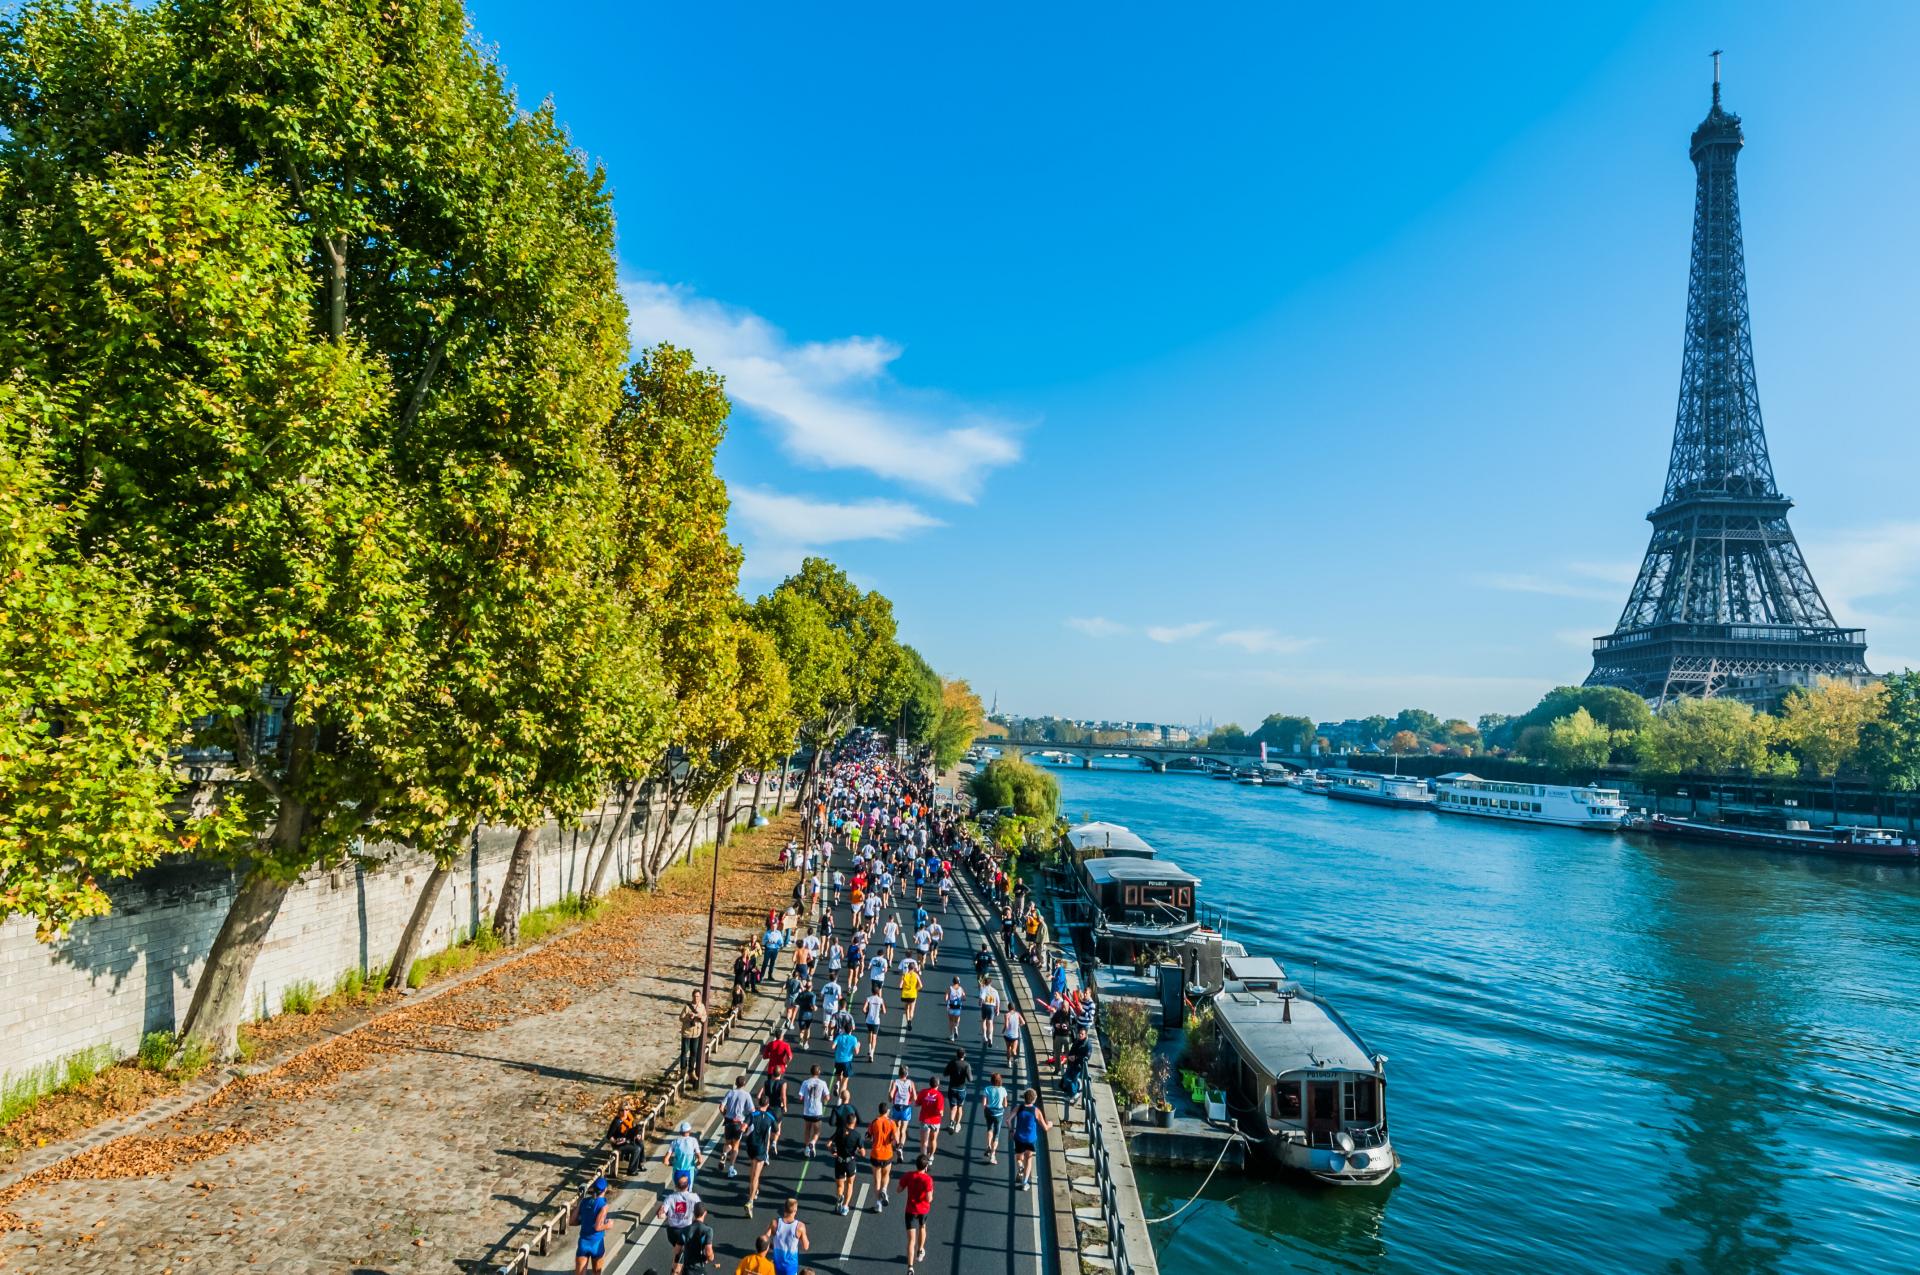 The 42.195 km Paris challenge